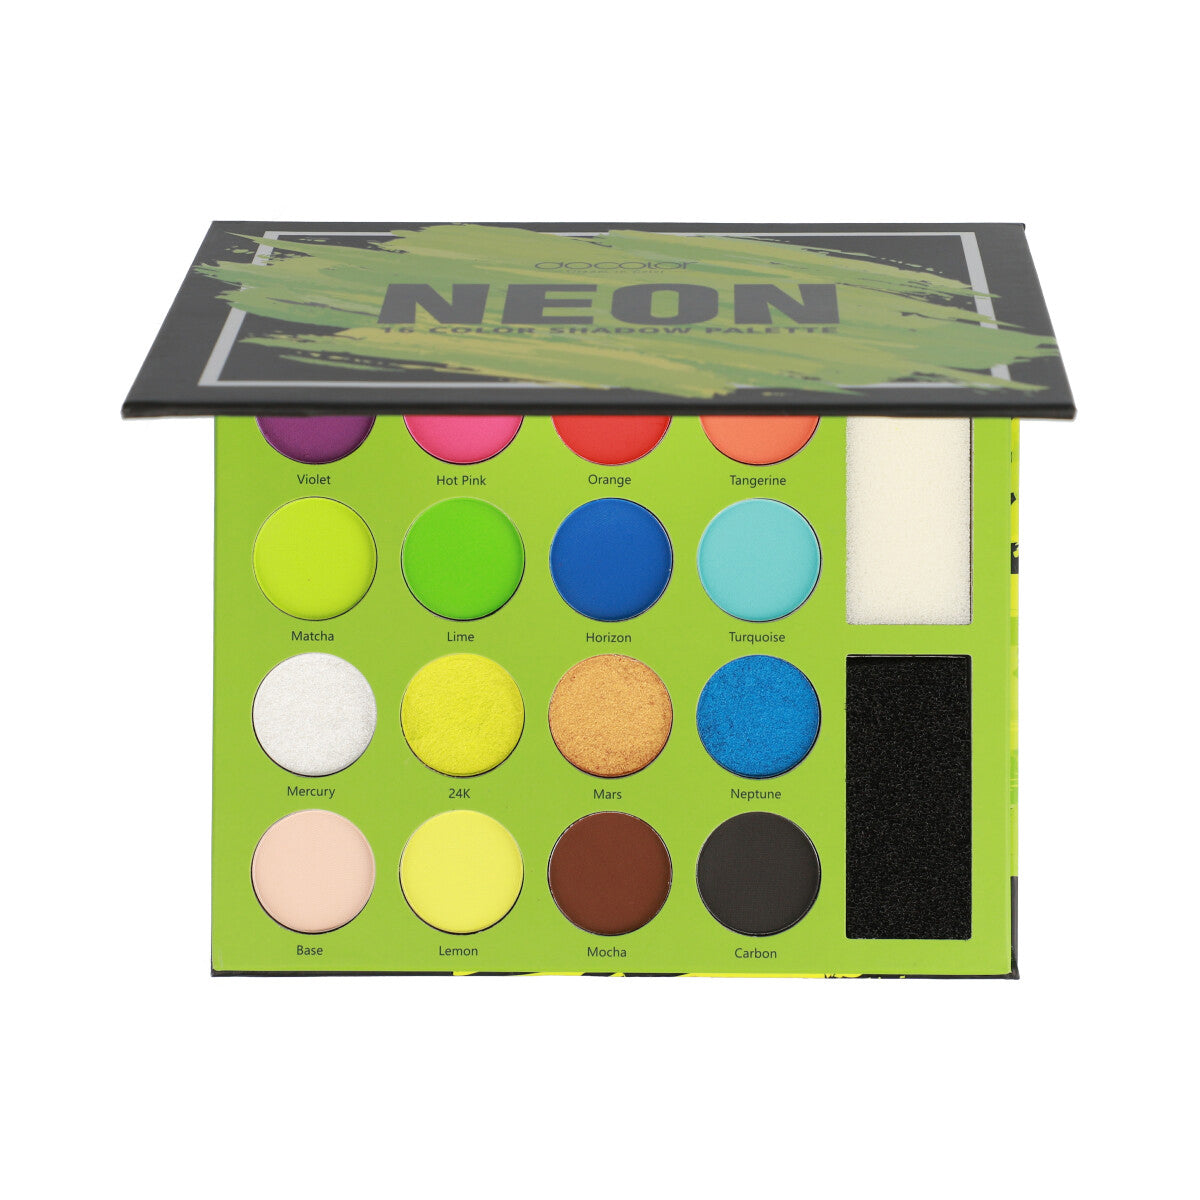 Neon - 16 Color Shadow Palette